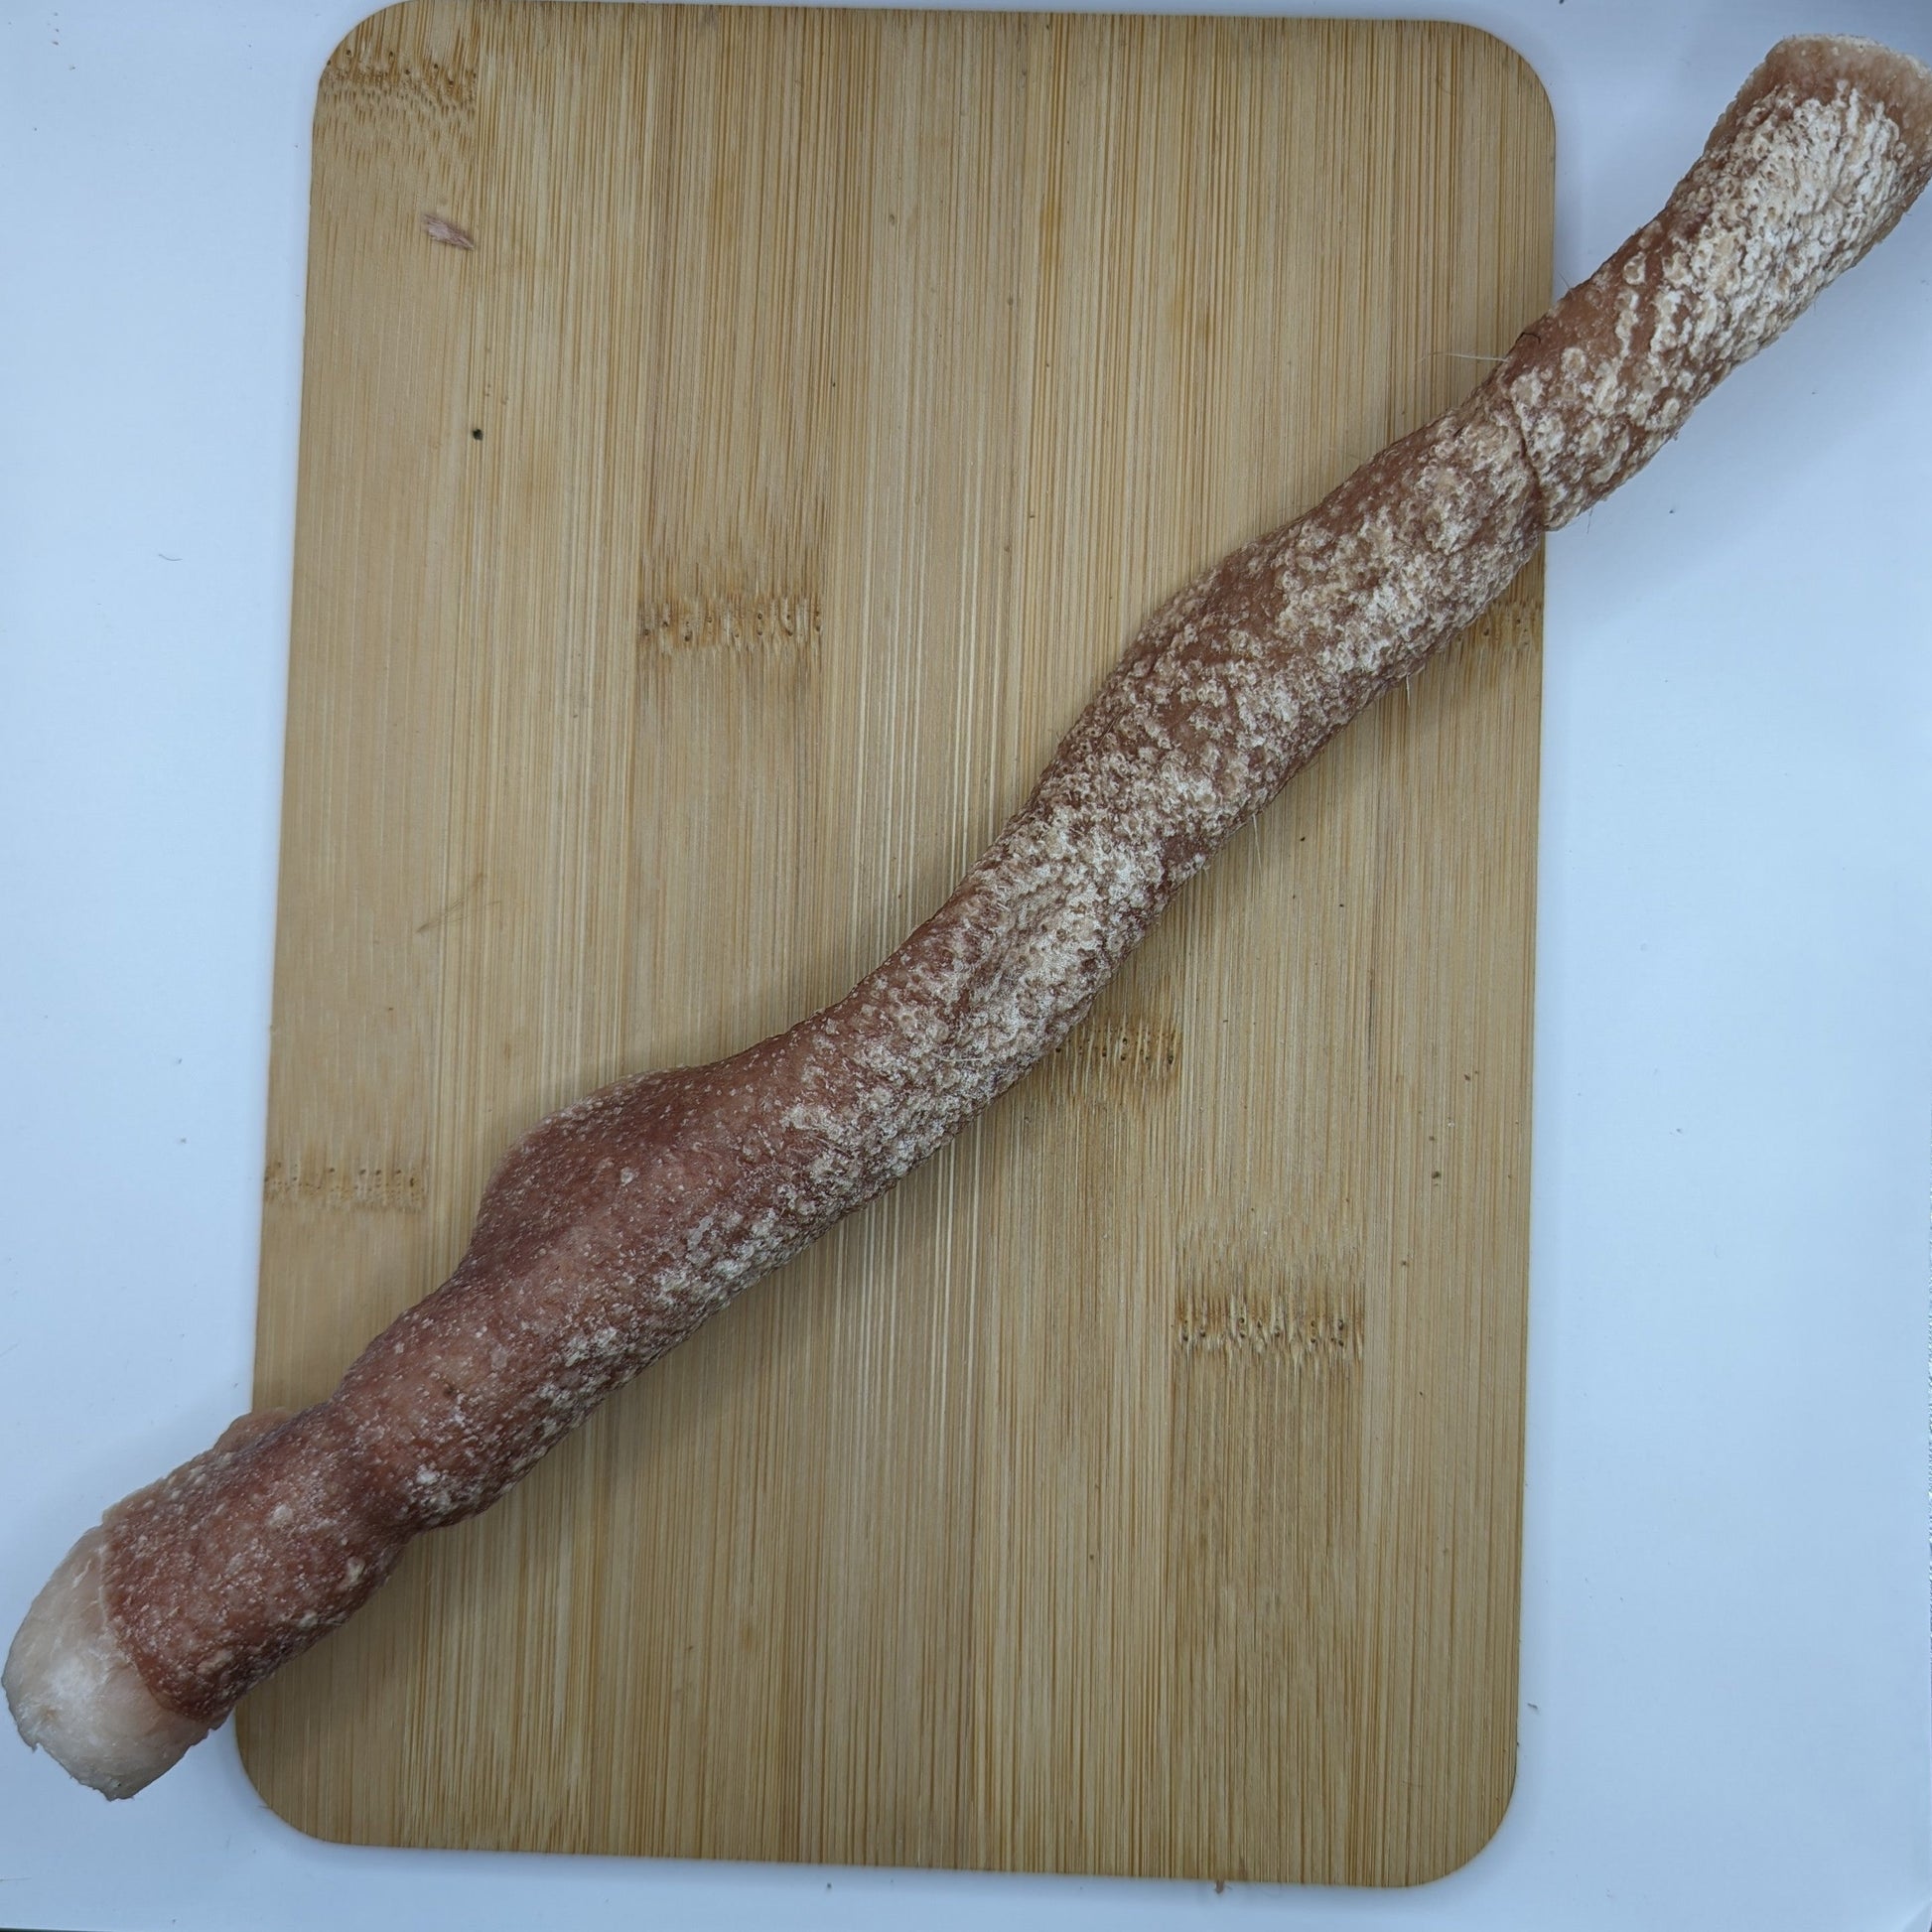 A Beast Feast heritage breed freeze-dried pork roll on a cutting board.